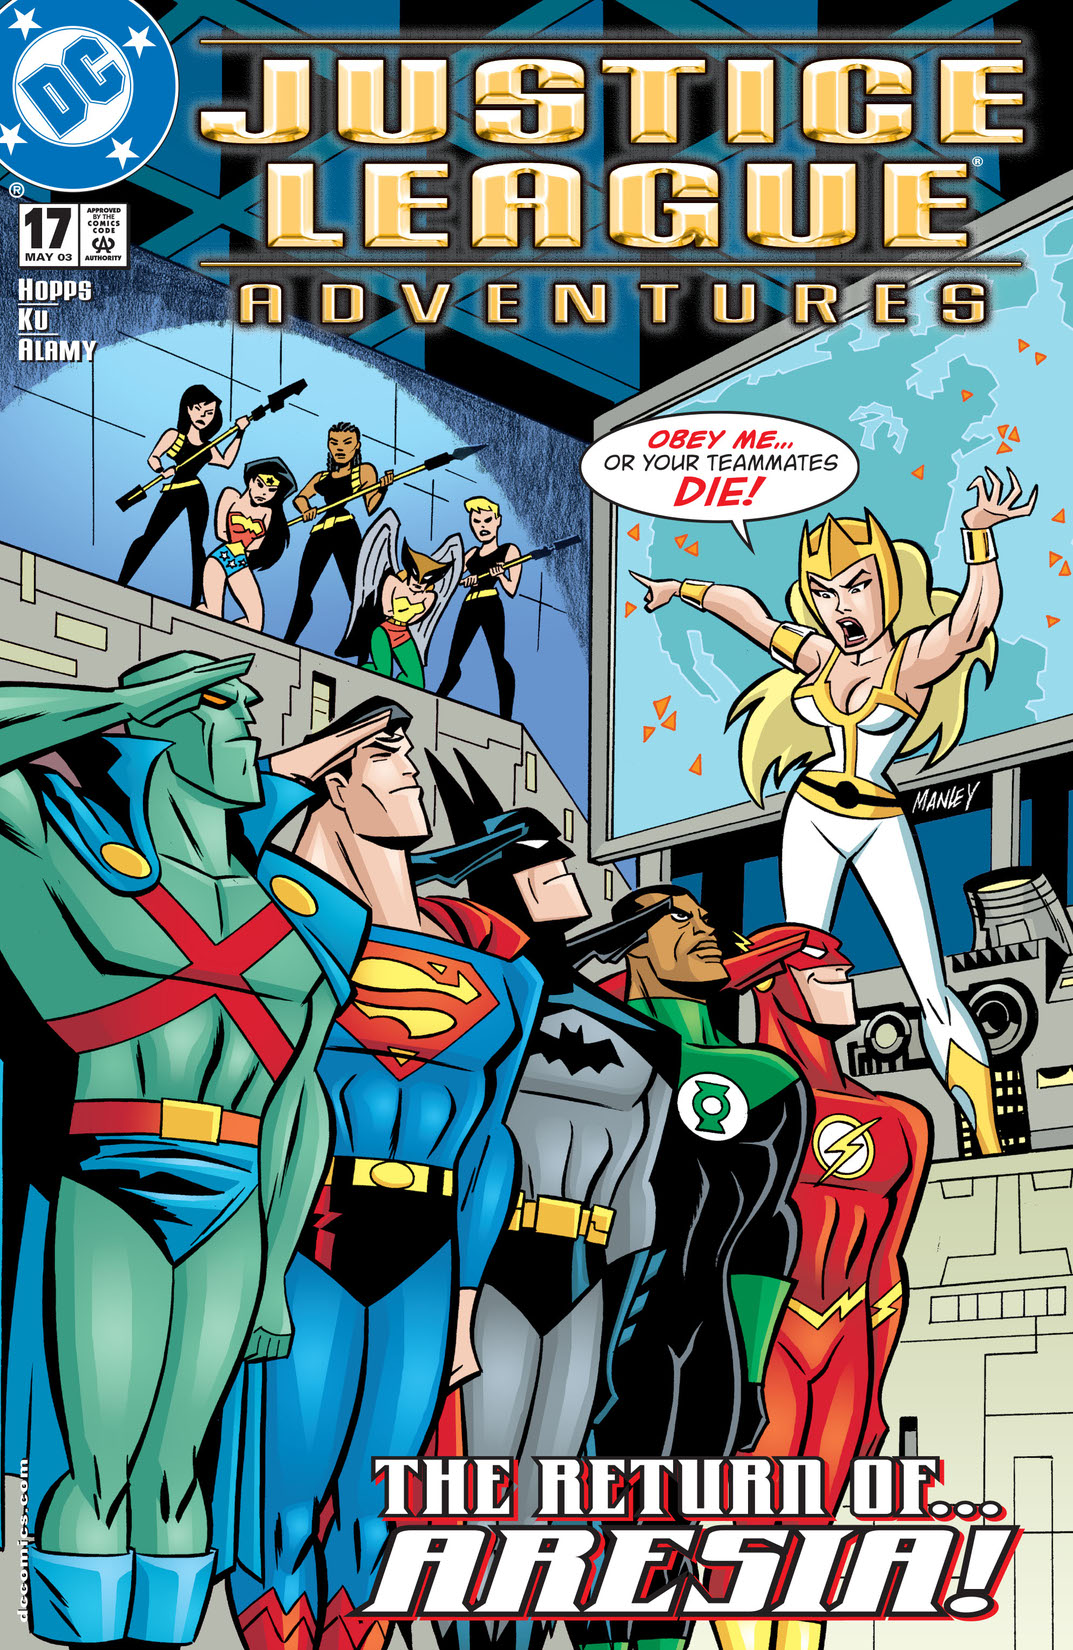 Justice League Adventures #17 preview images